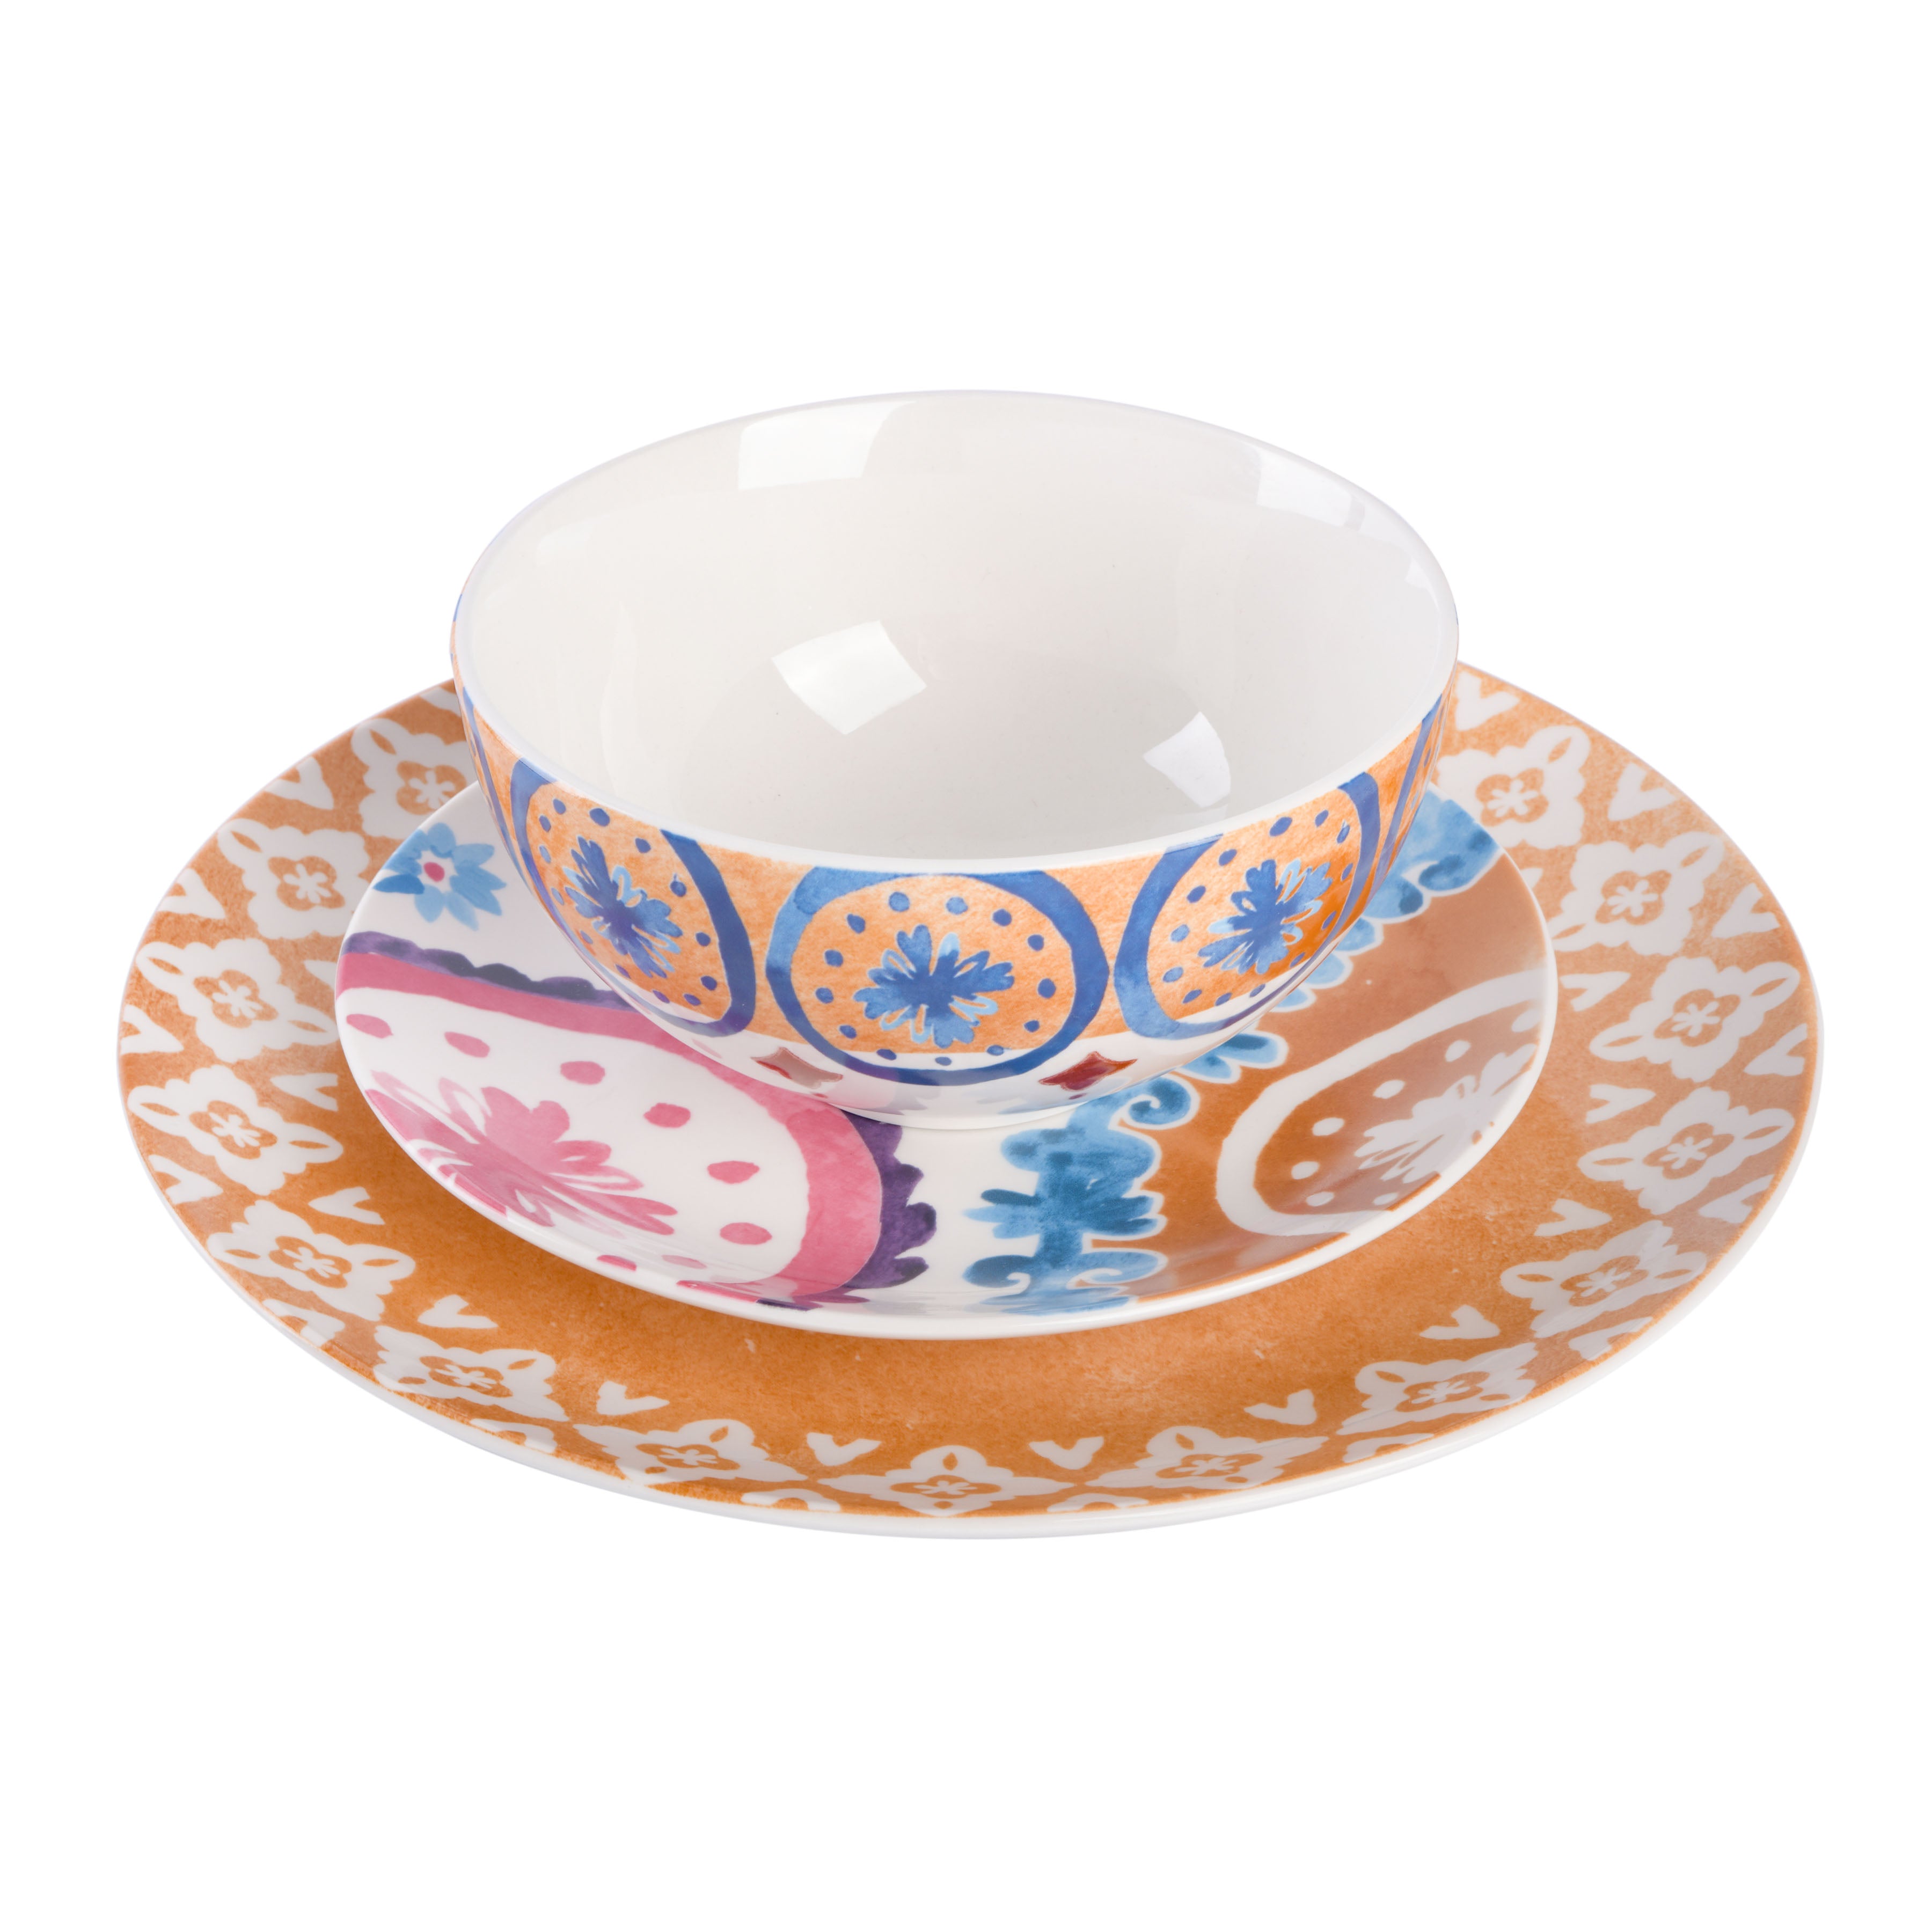 Spice by Tia Mowry Savory Saffron 18-Piece Porcelain Dinnerware Set